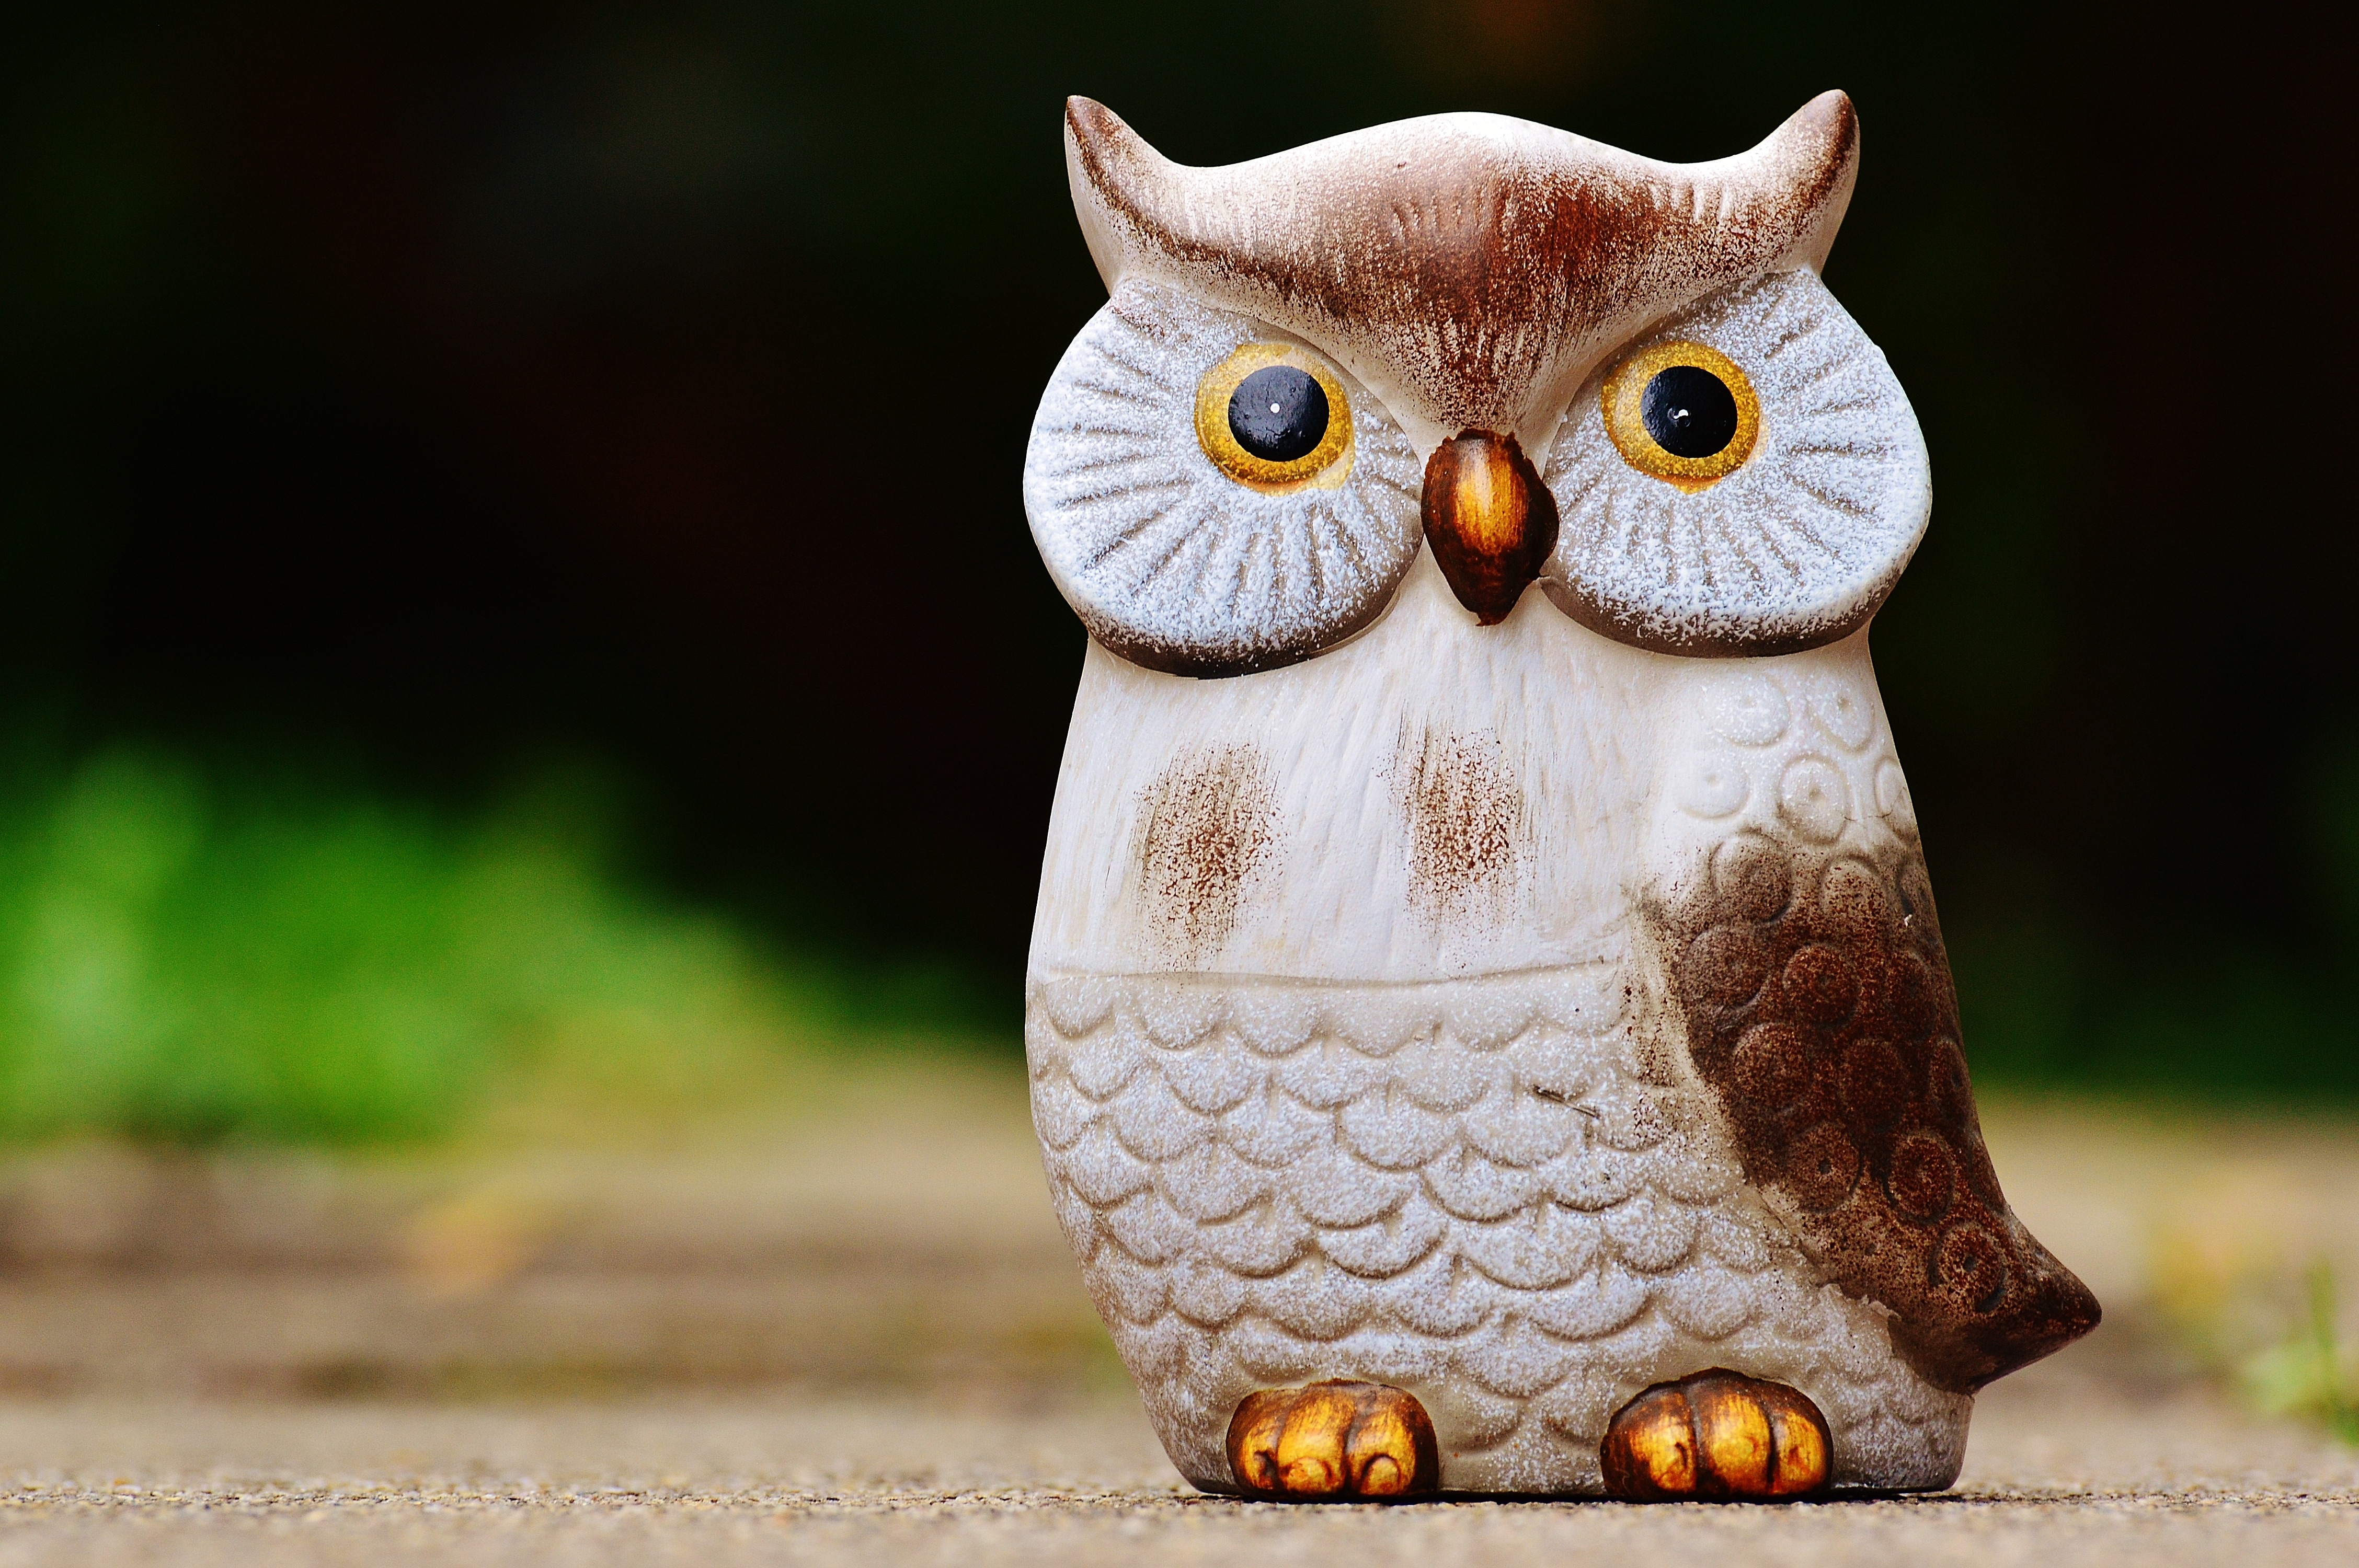 close up photo of ceramic owl figurine